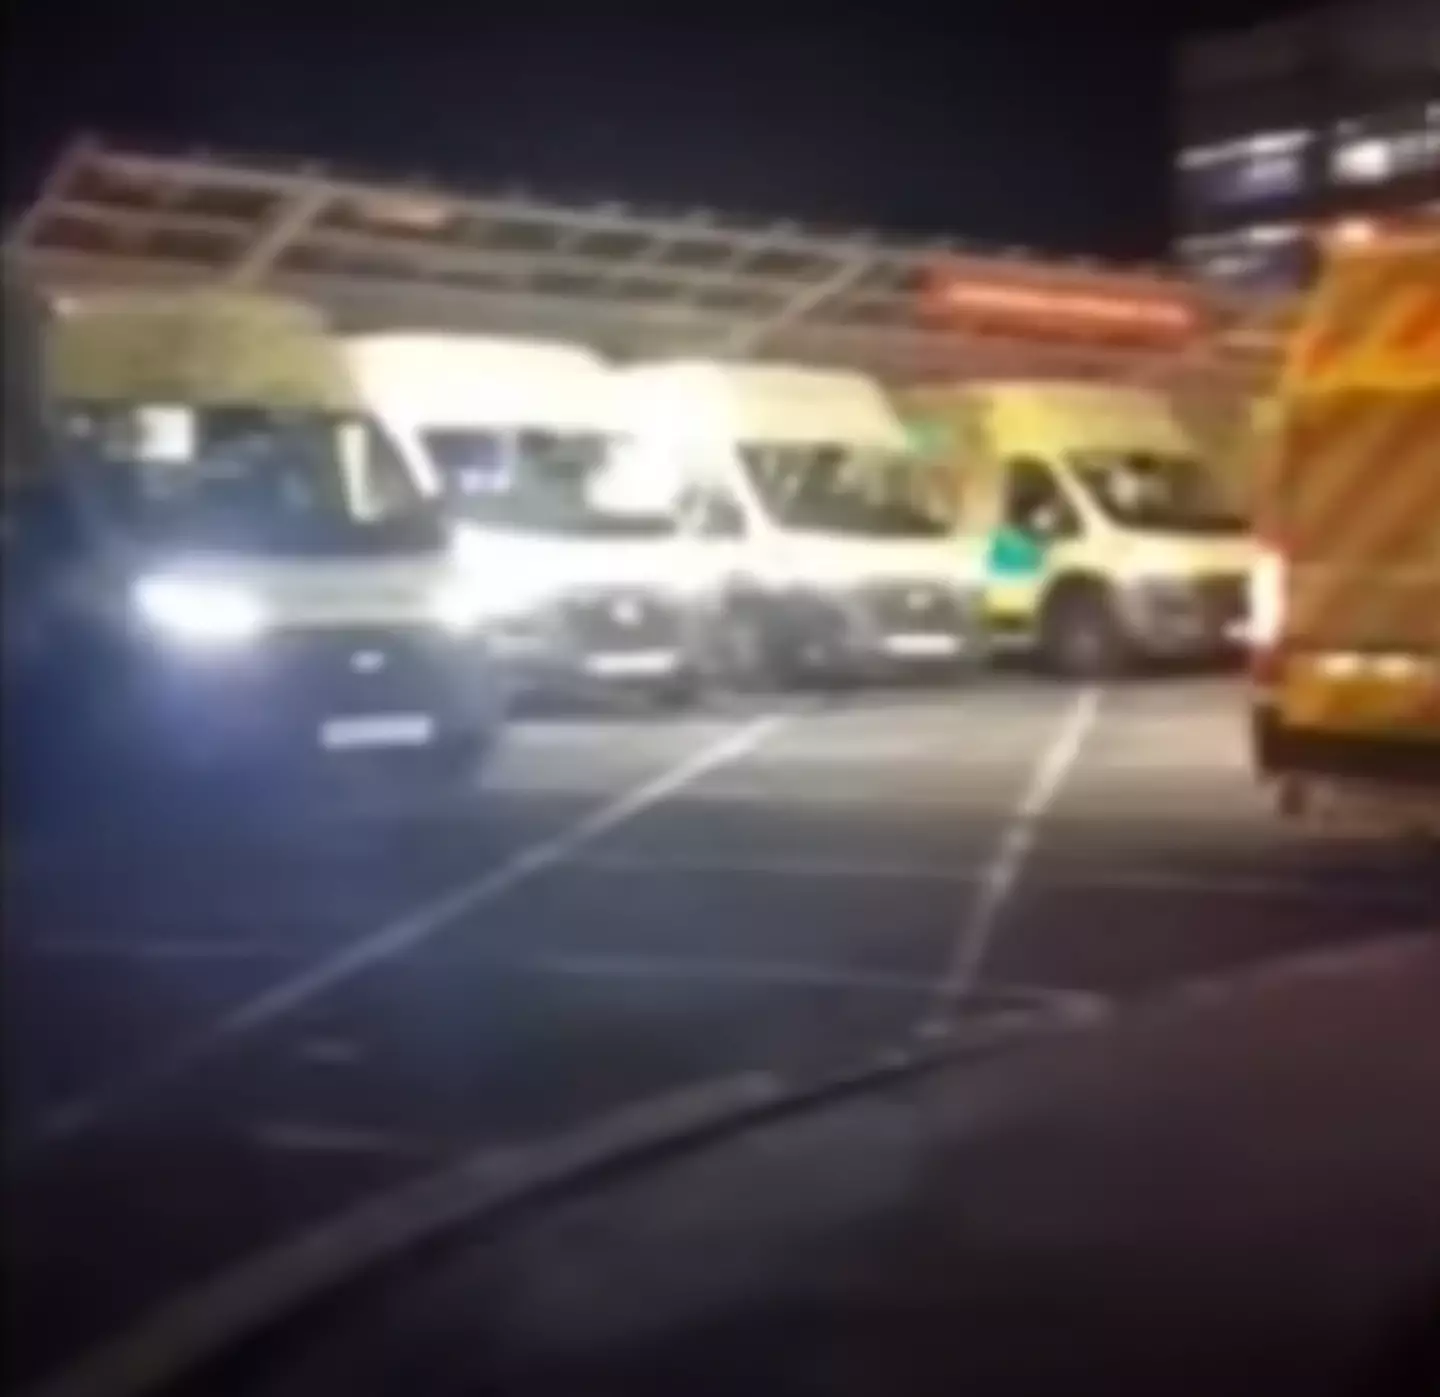 Multiple ambulances were filmed waiting outside the hospital.